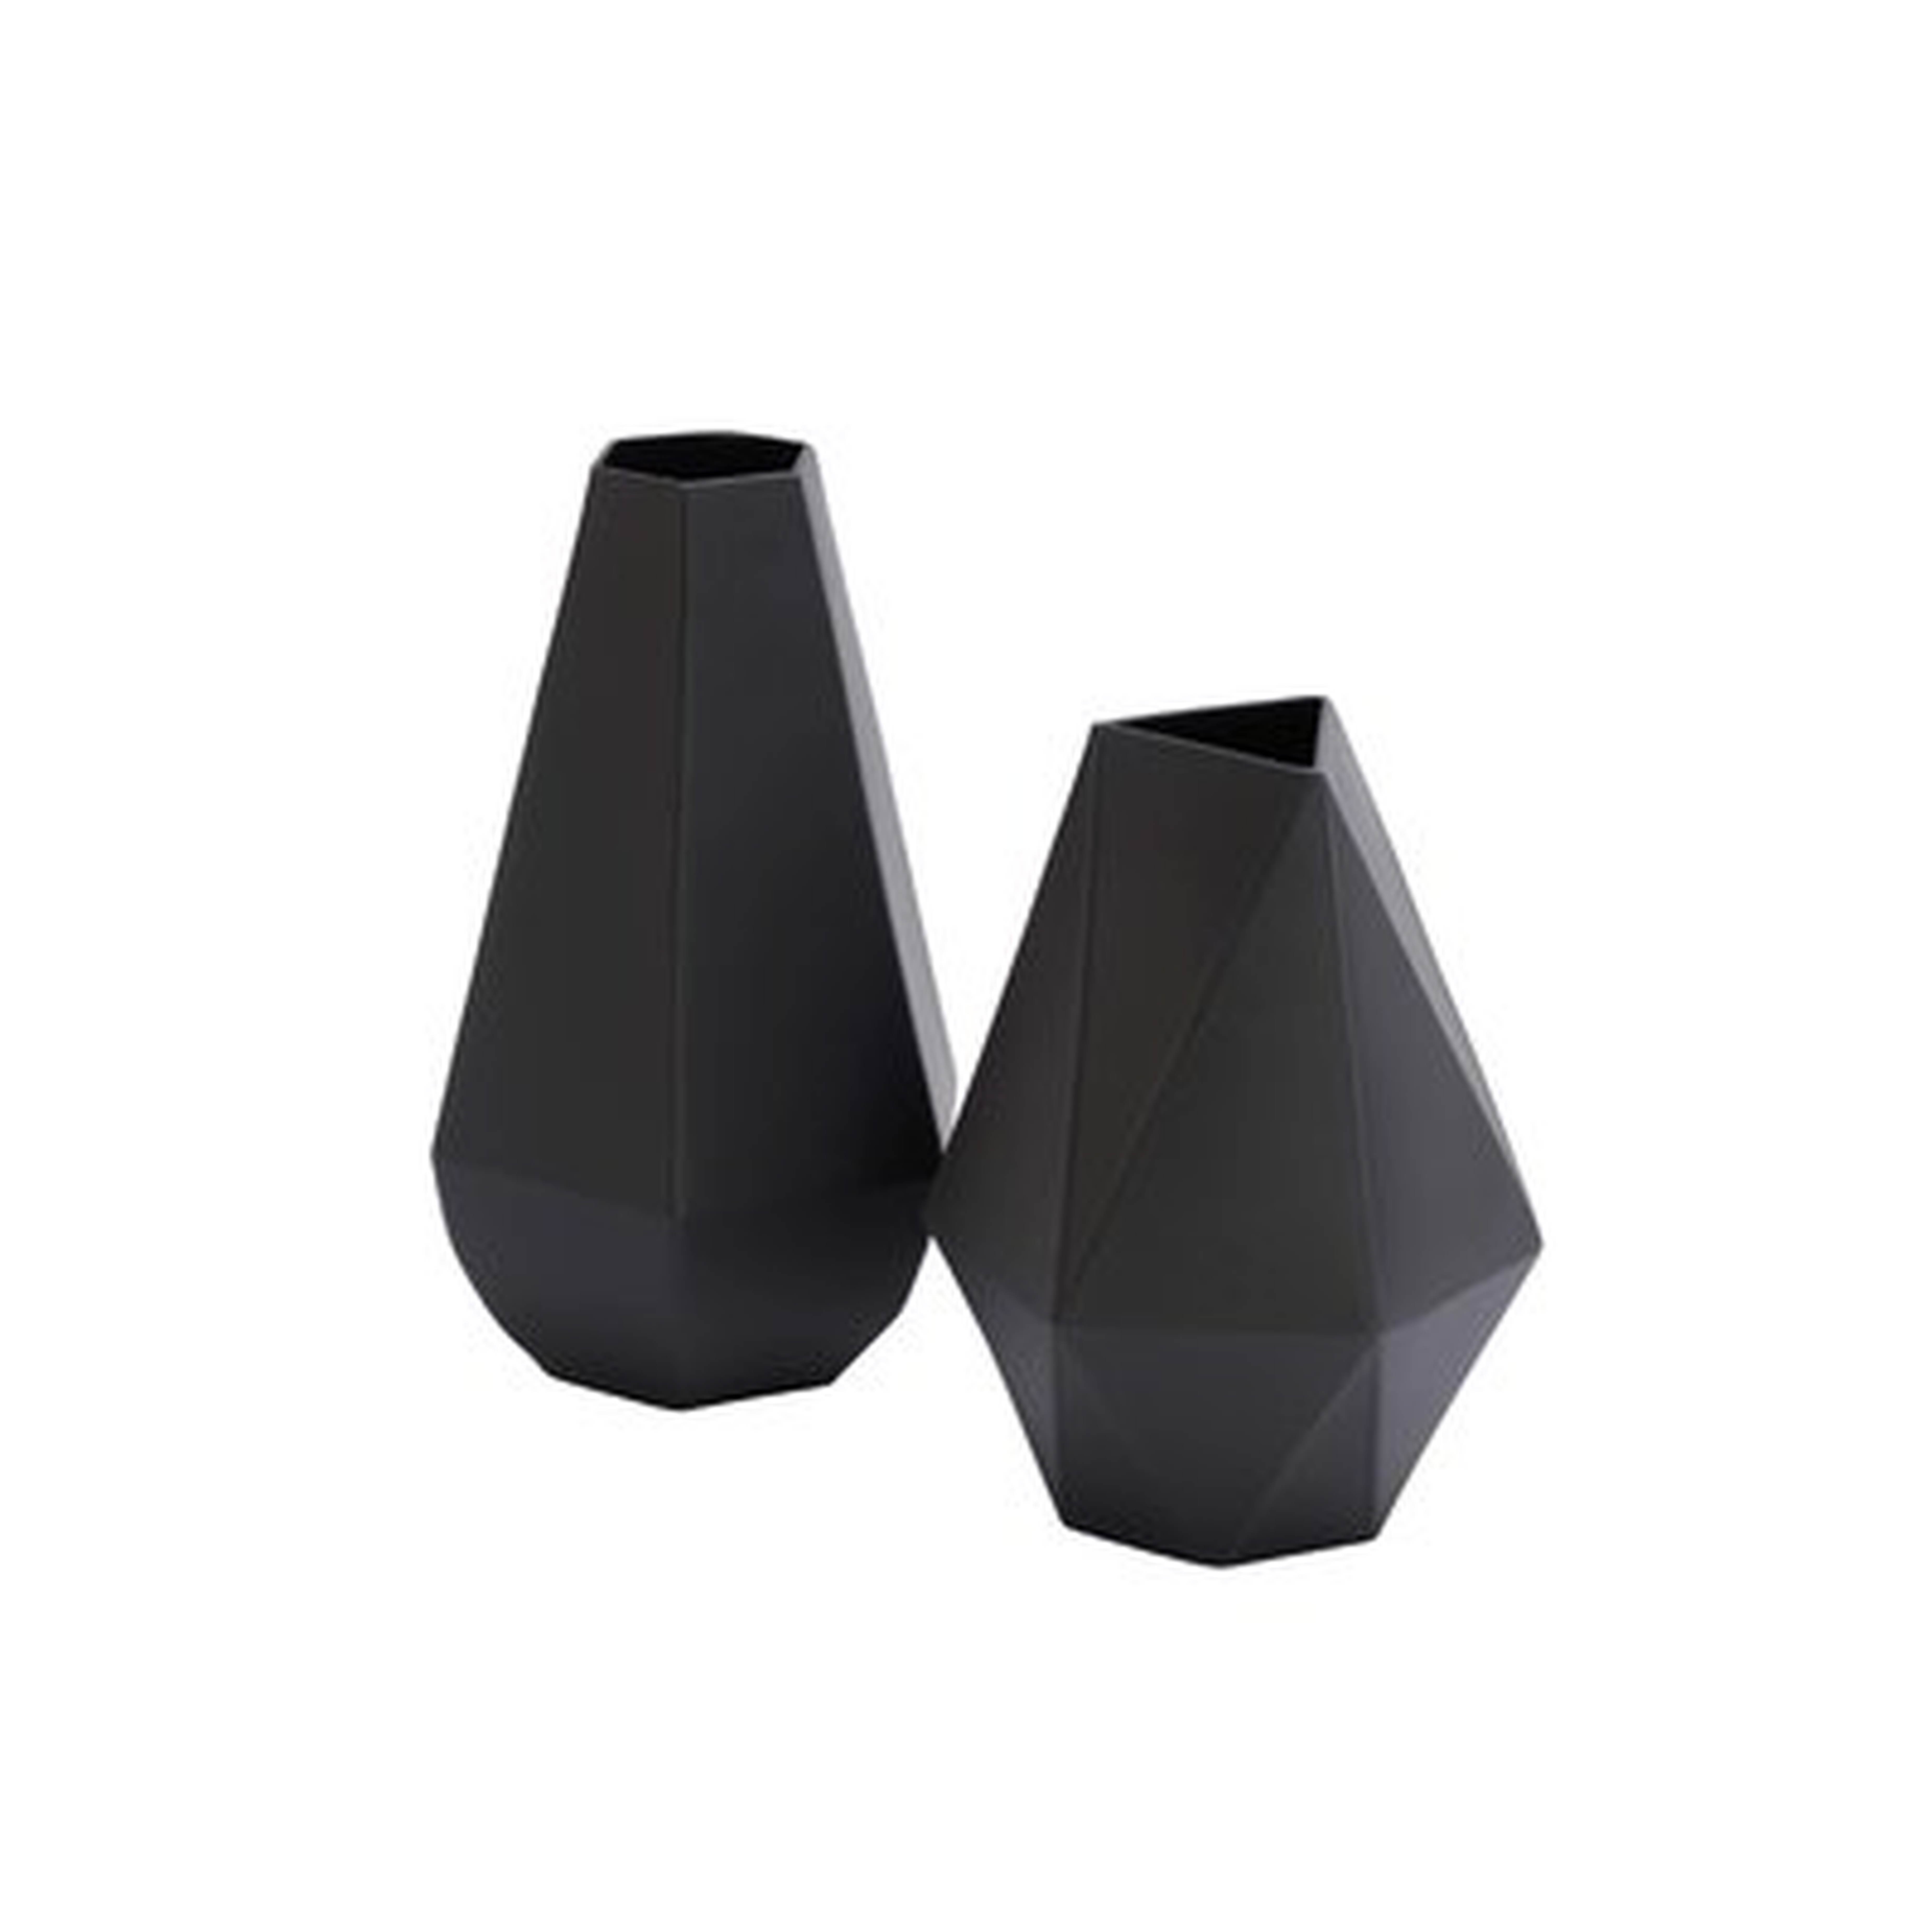 2 Piece Table Vase Set - Wayfair